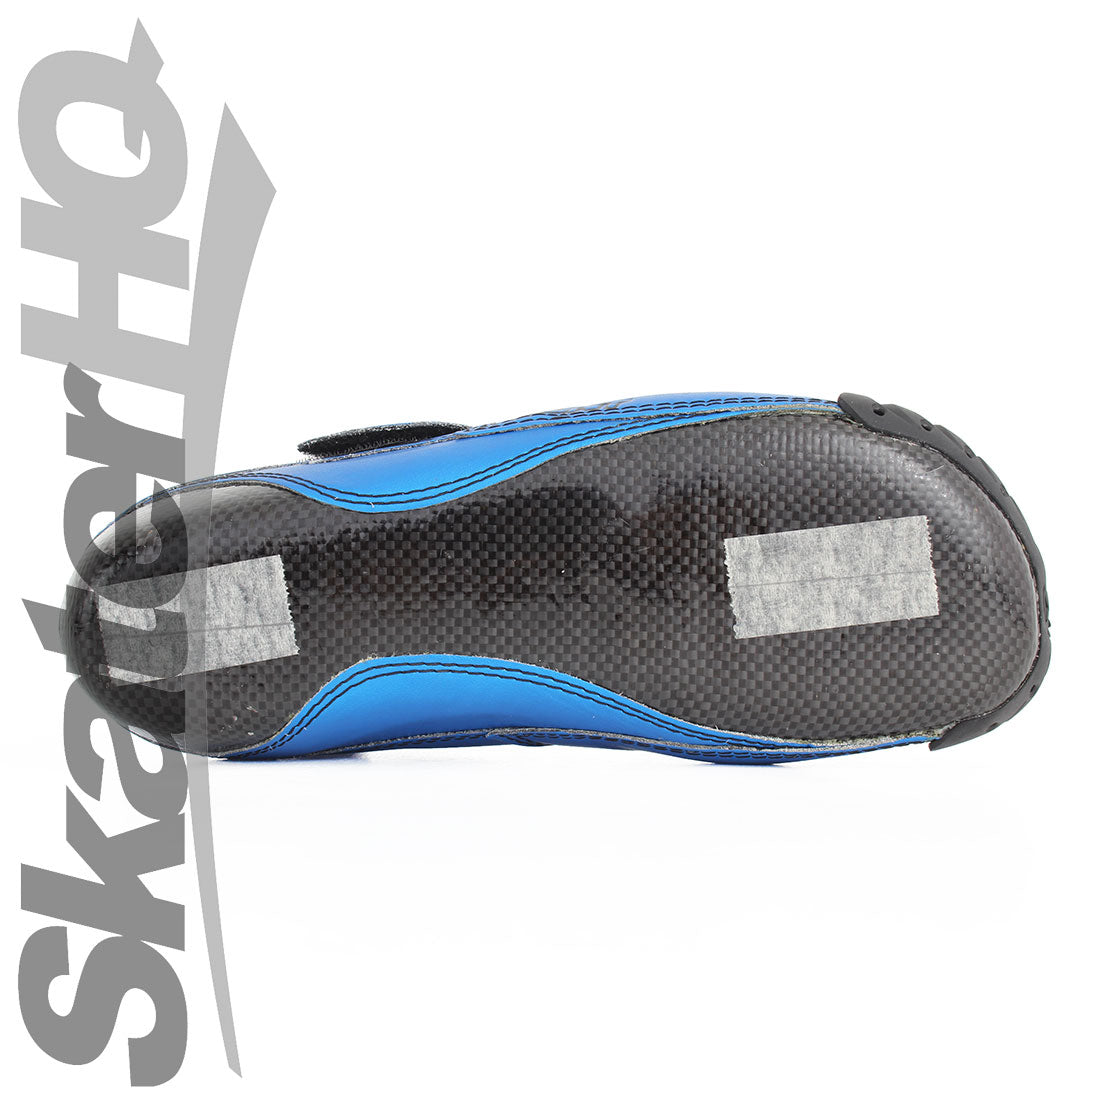 BONT Vaypor Custom Boot - Metallic Blue - 3.5US EU36.5 23.2cm Roller Skate Boots